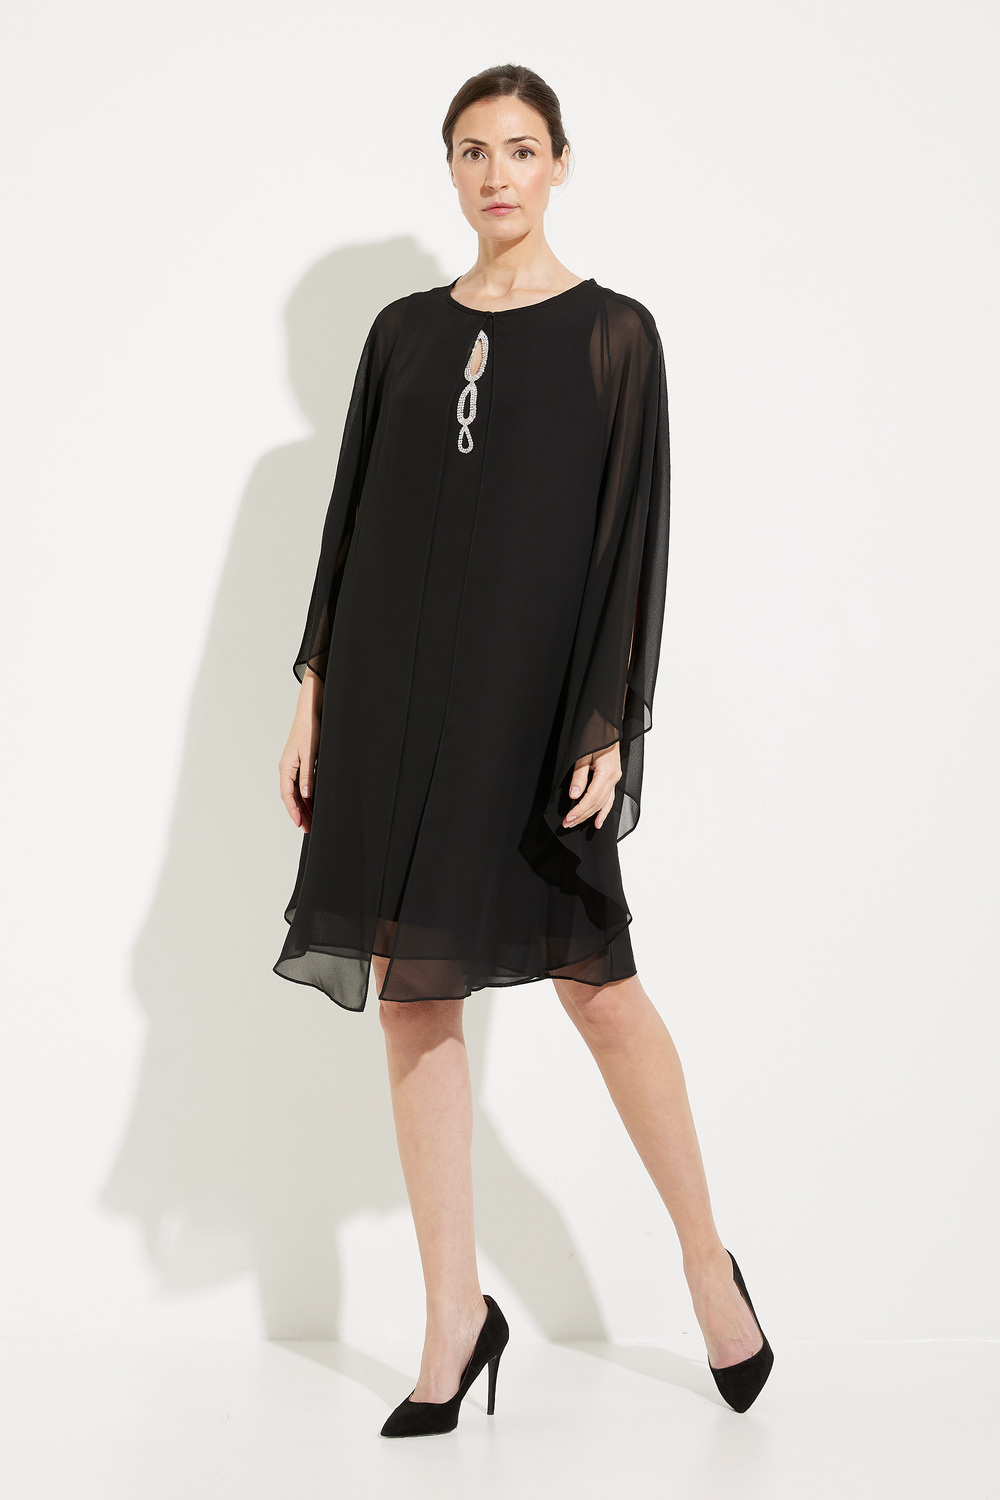 Beaded Capelet Dress Style SL112806. Black